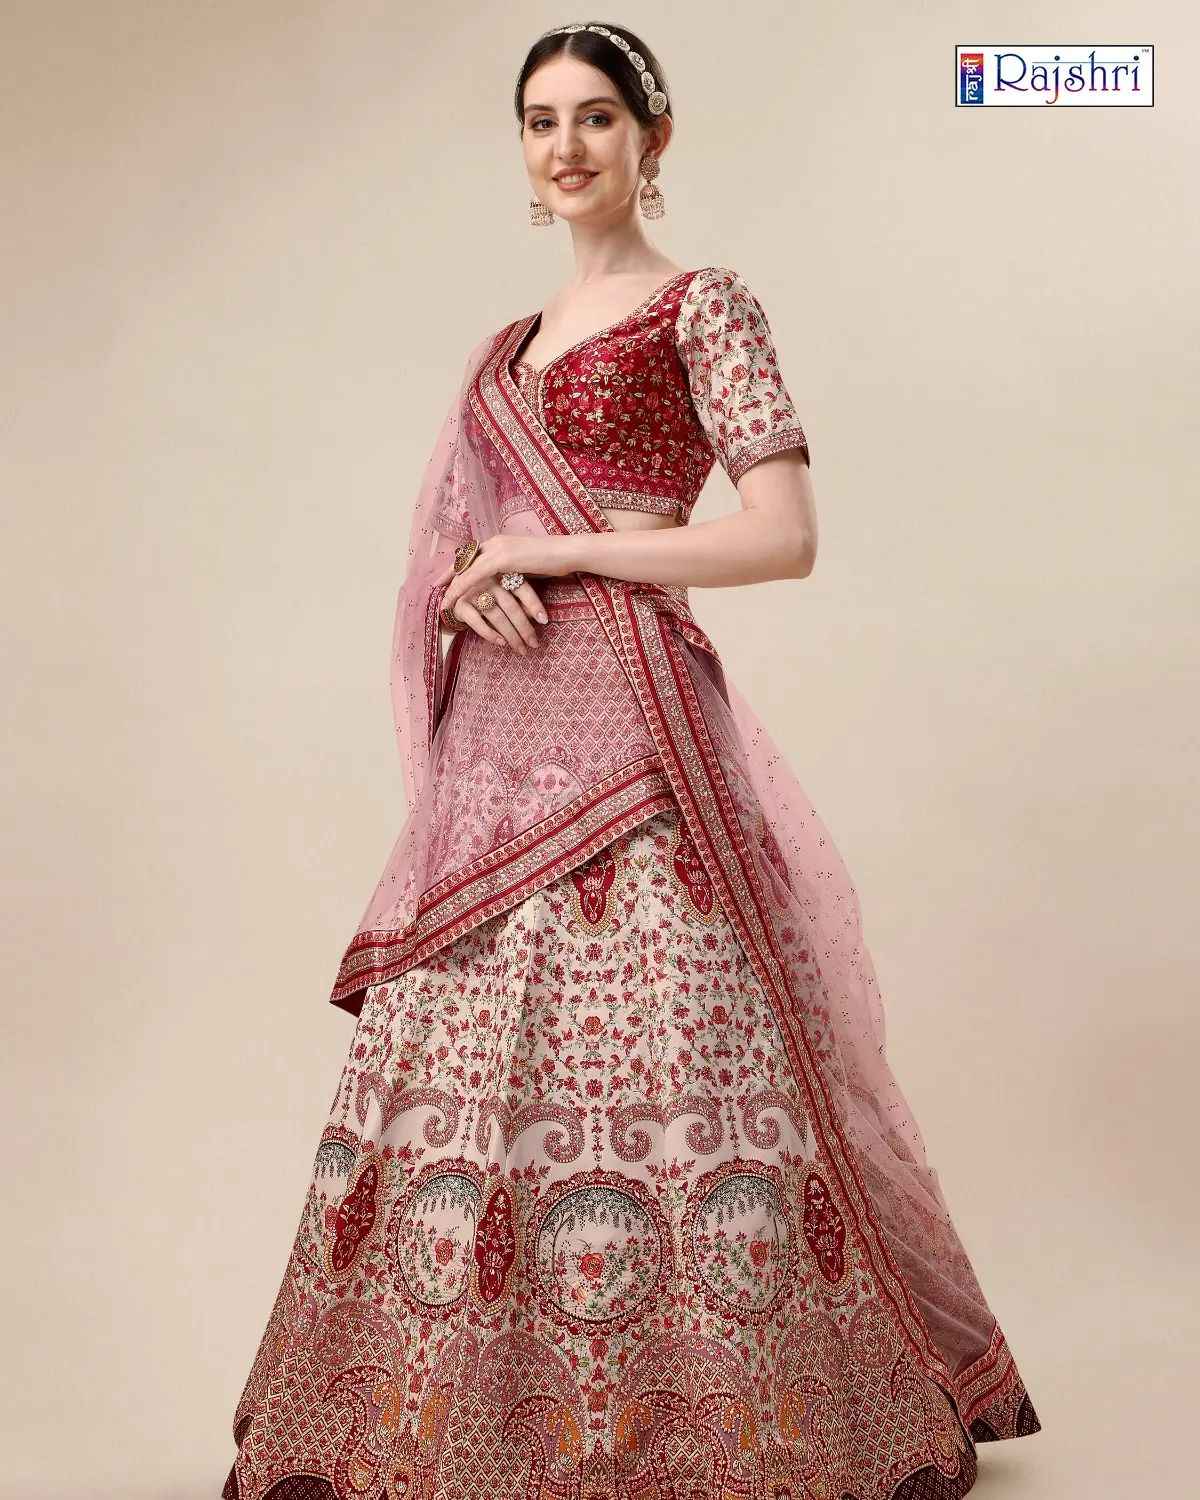 Introducing new range of bridal gowns... - KIARA by Mahaveer | Facebook